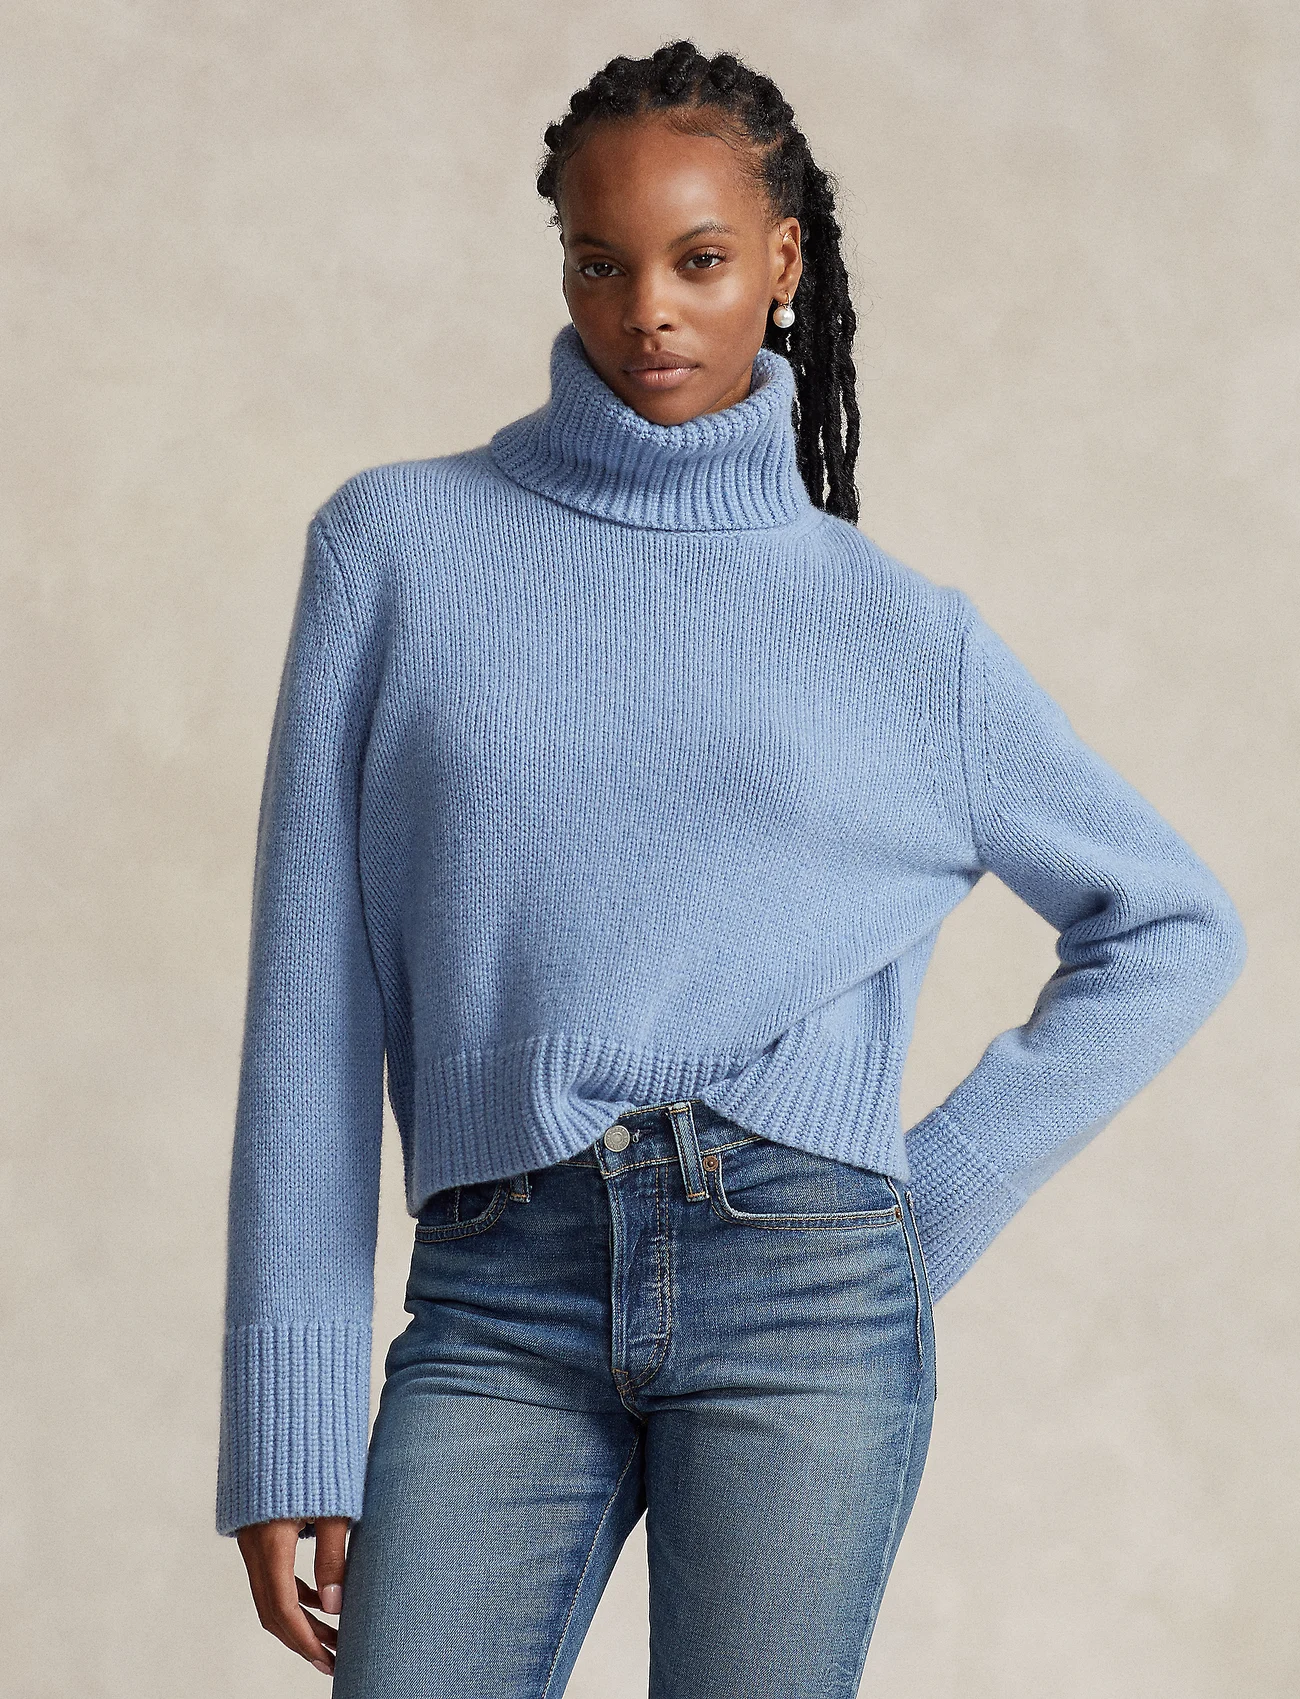 Polo Ralph Lauren - Wool-Cashmere Turtleneck Sweater - pulls à col roulé - chambray melange - 0